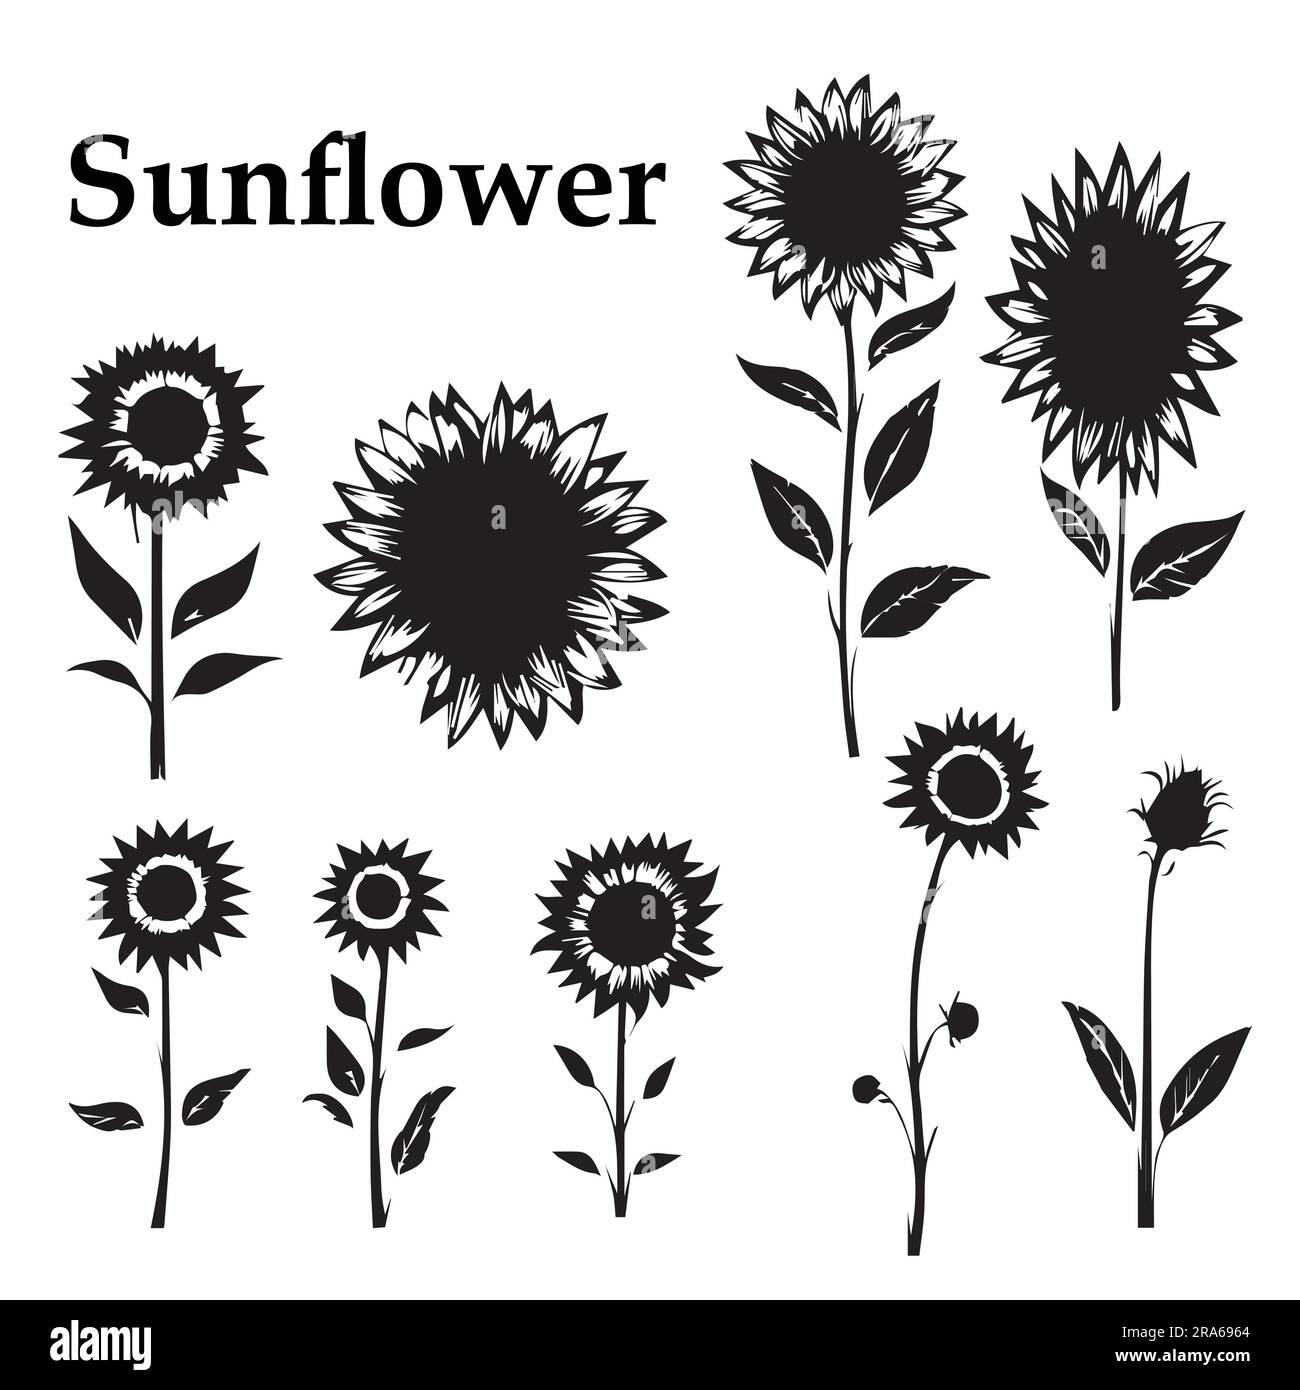 A set of silhouette sunflower vector illustration Stock Vector